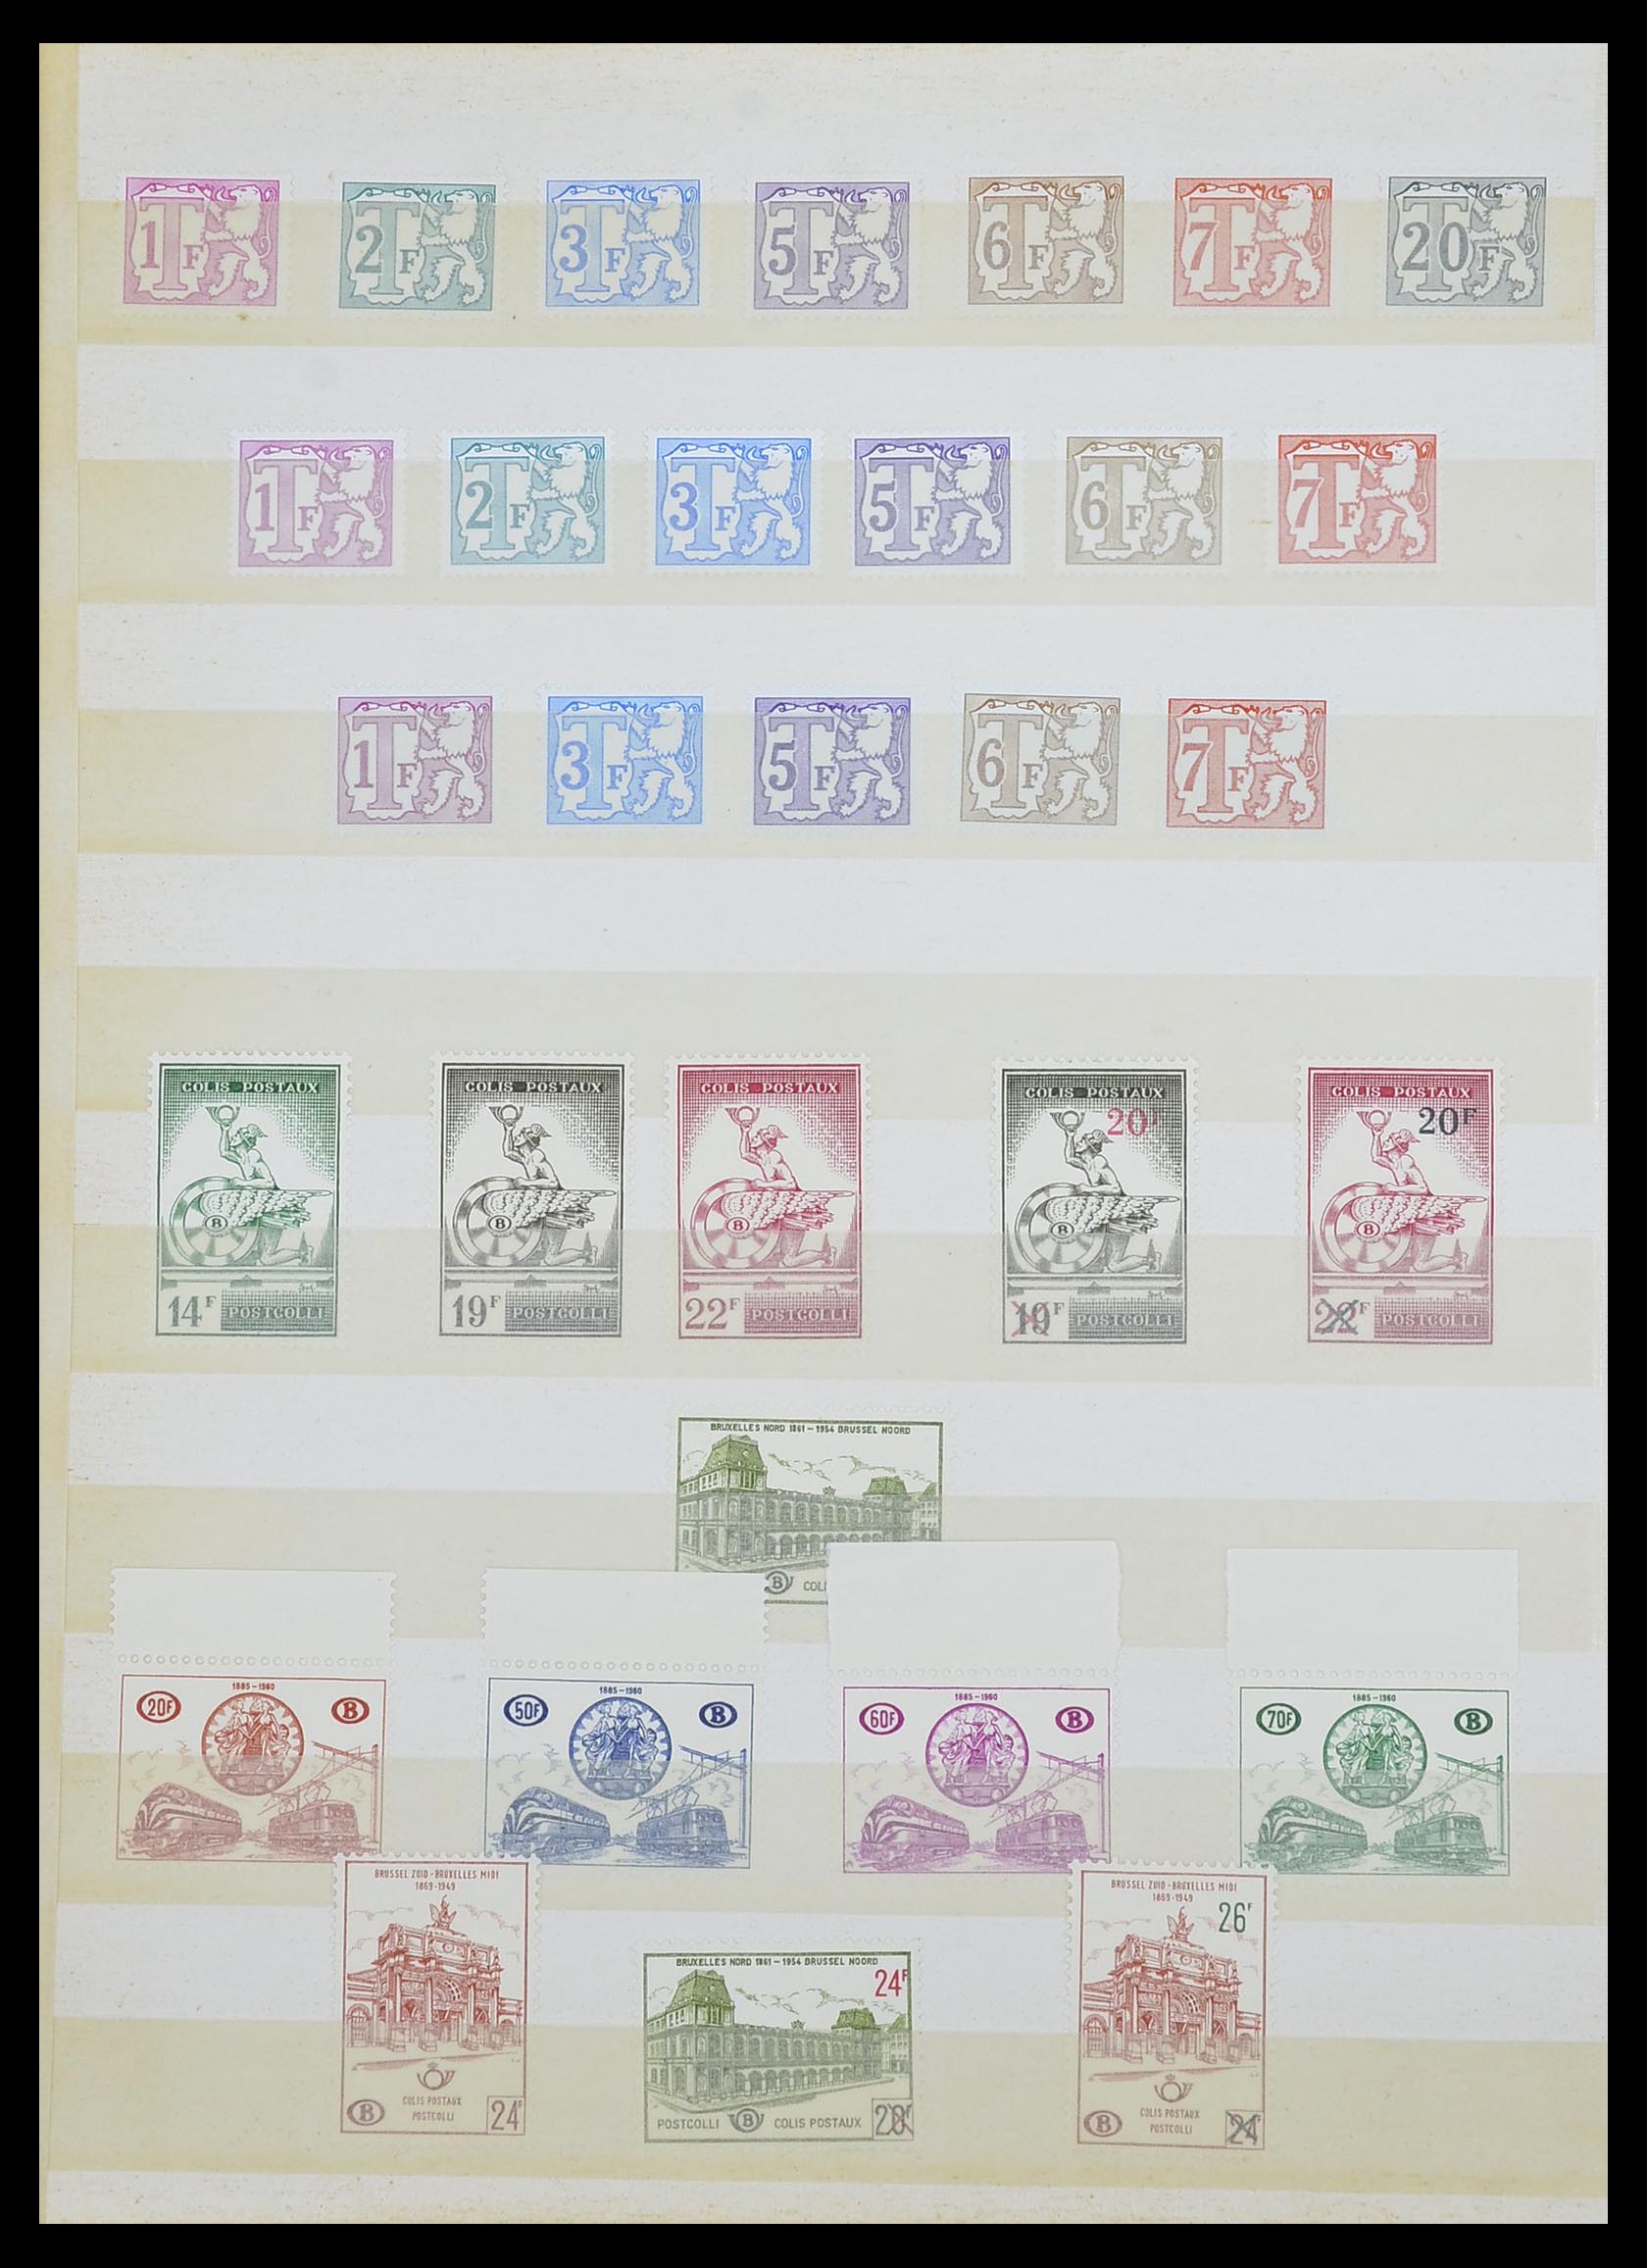 33613 029 - Stamp collection 33613 Belgium 1957-1983.